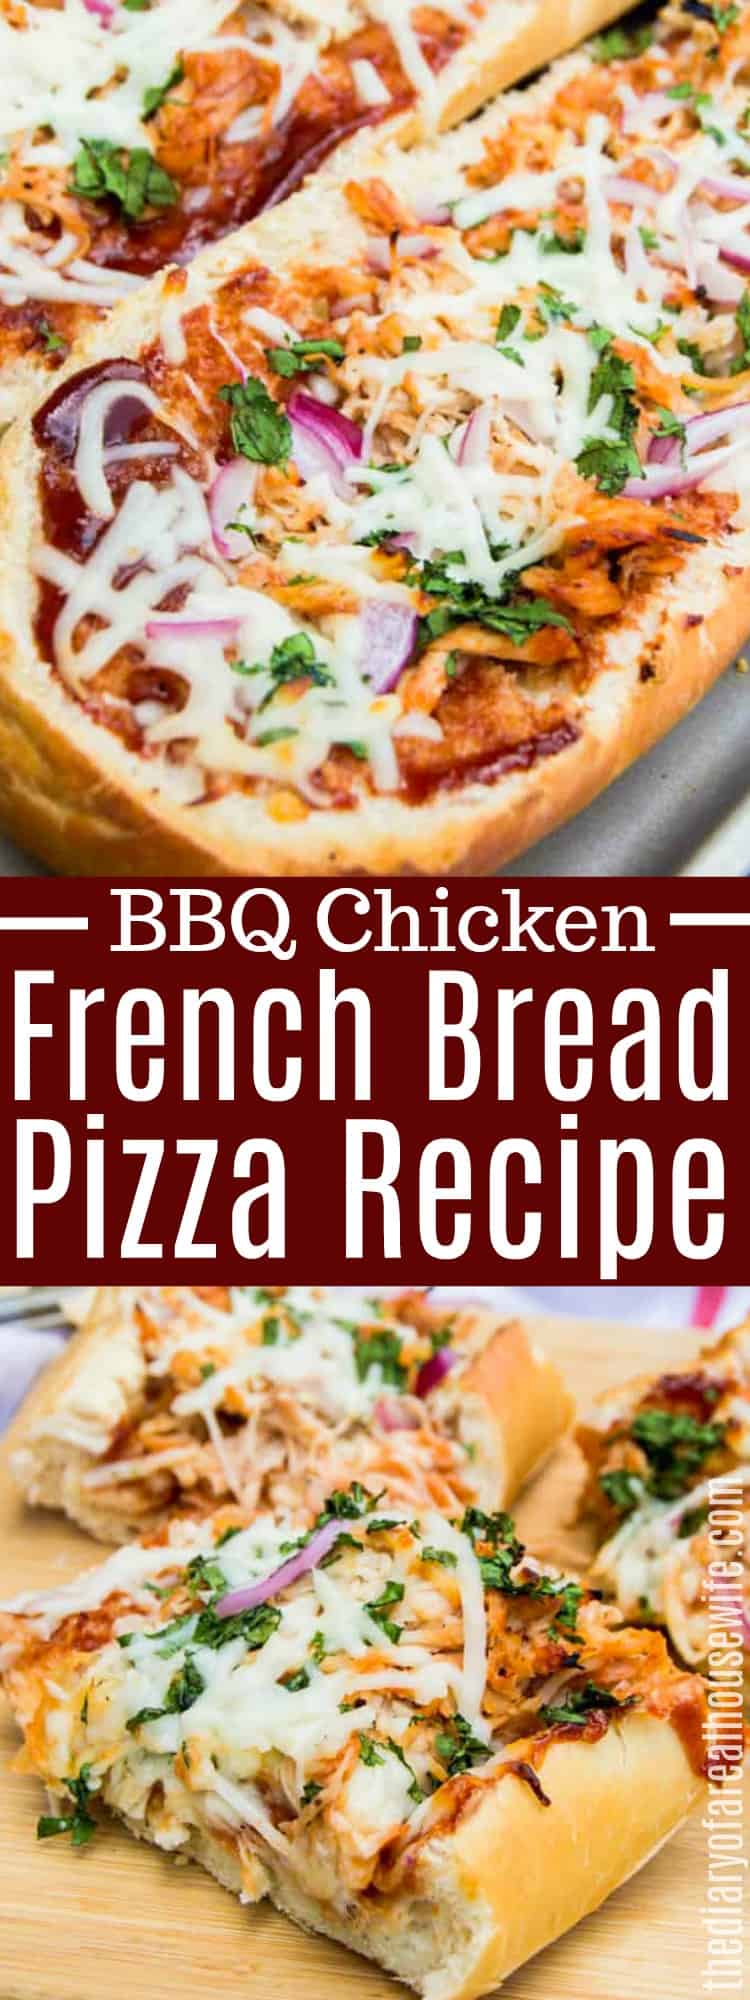 BBQ Chicken French Bread Pizza